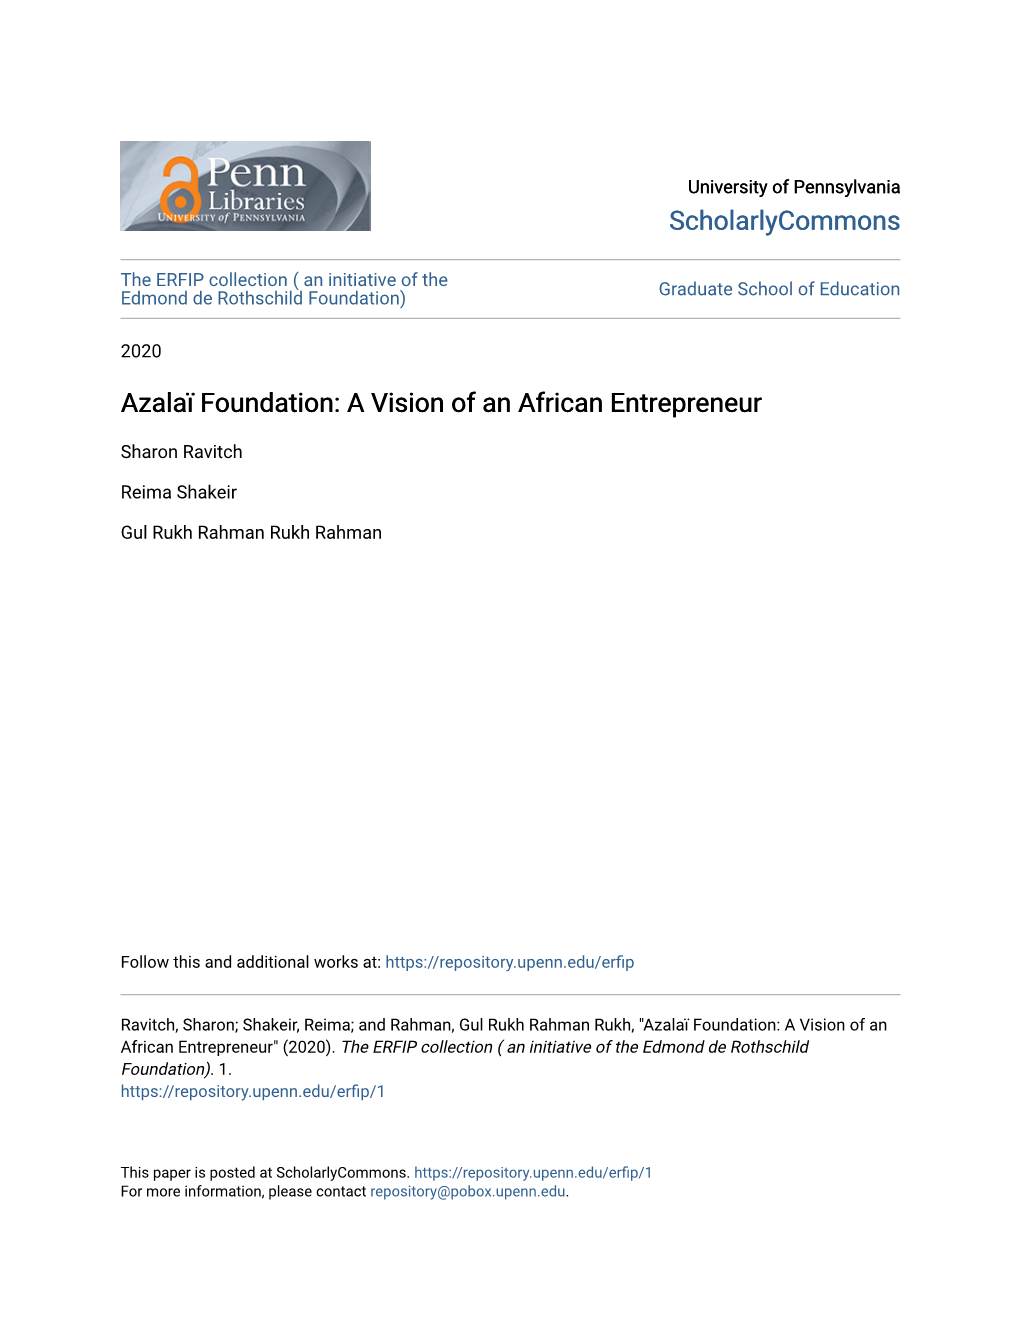 Azalaï Foundation: a Vision of an African Entrepreneur